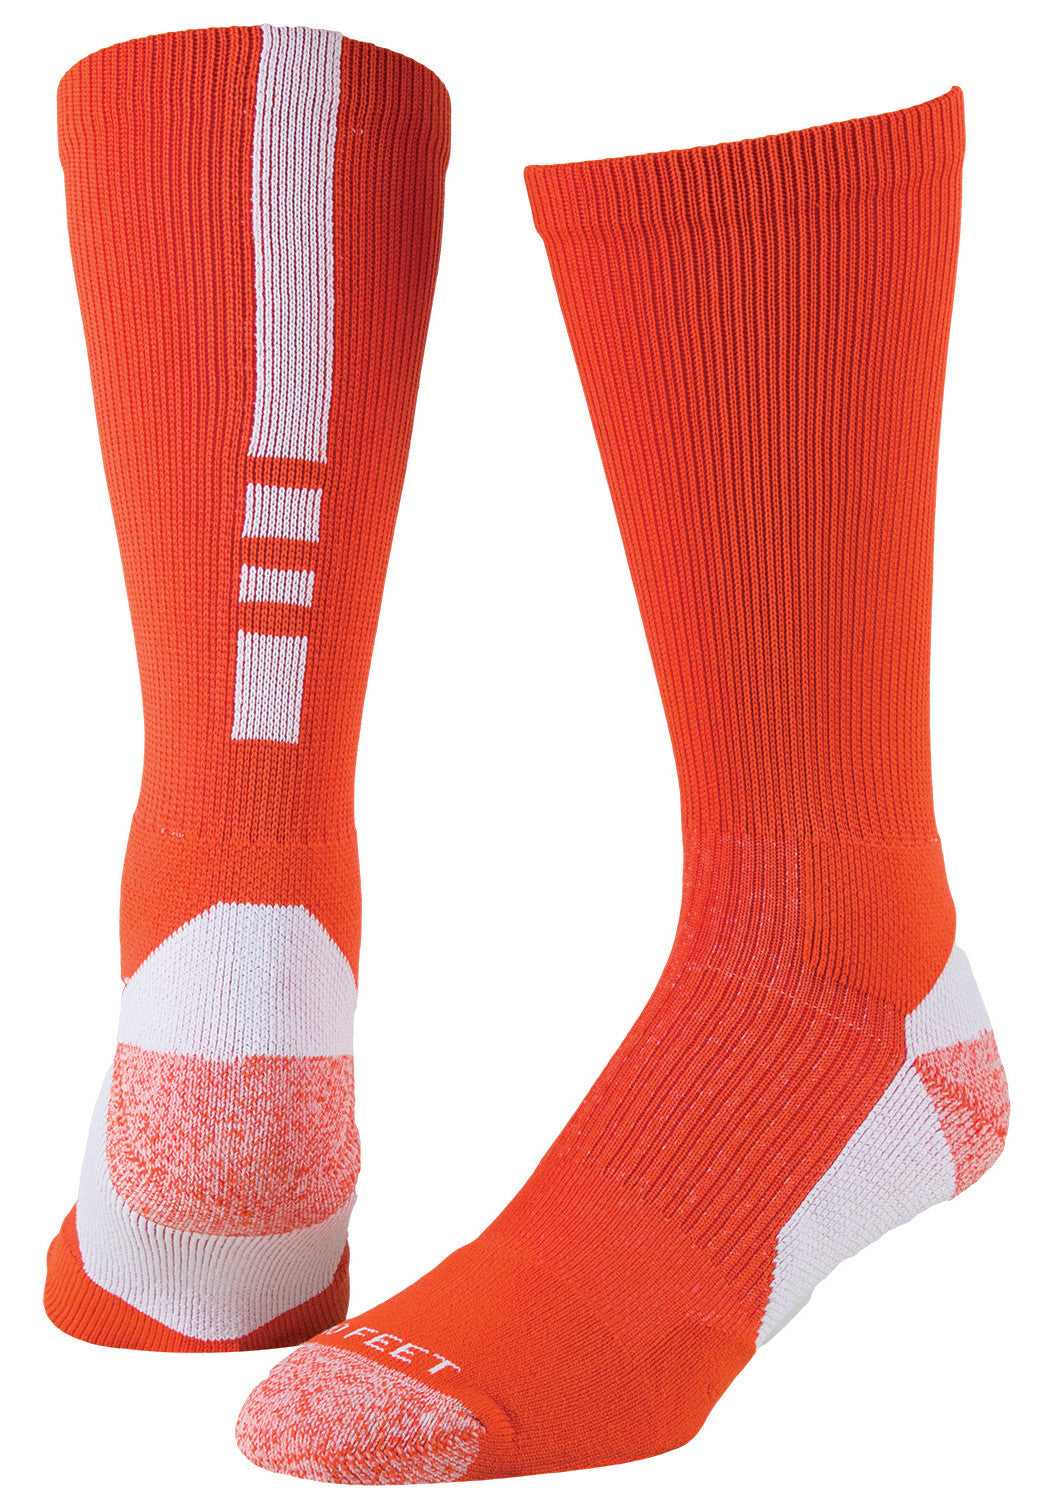 Pro Feet 238 Pro Feet Performance Shooter 2.0 Socks - Orange Wite - HIT a Double